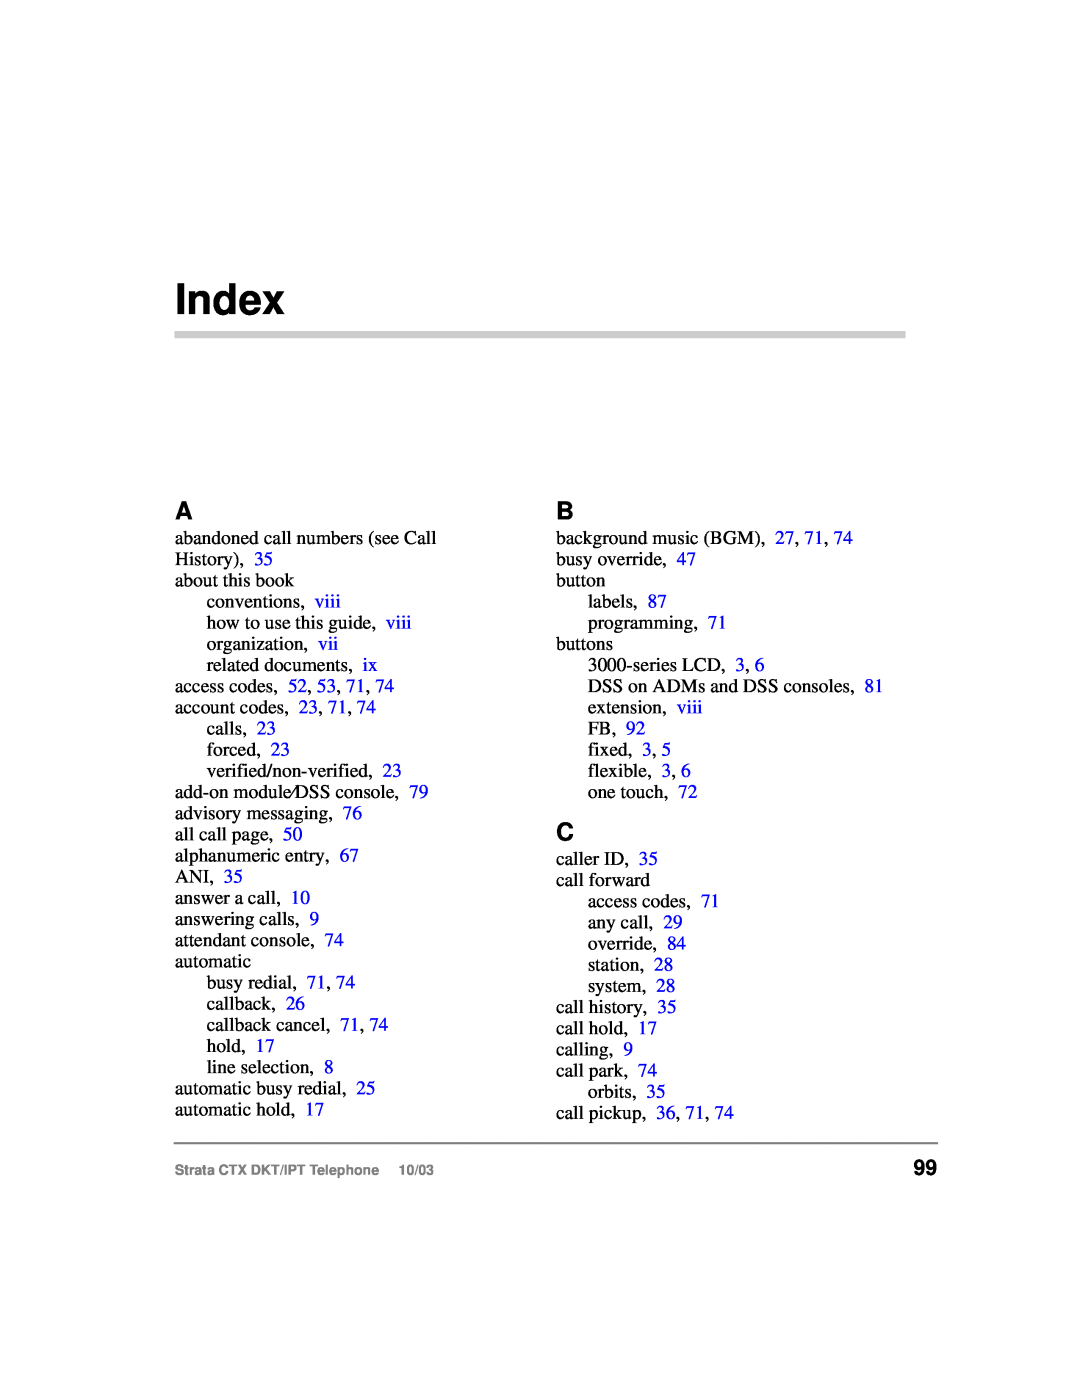 Toshiba DKT, IPT manual Index 